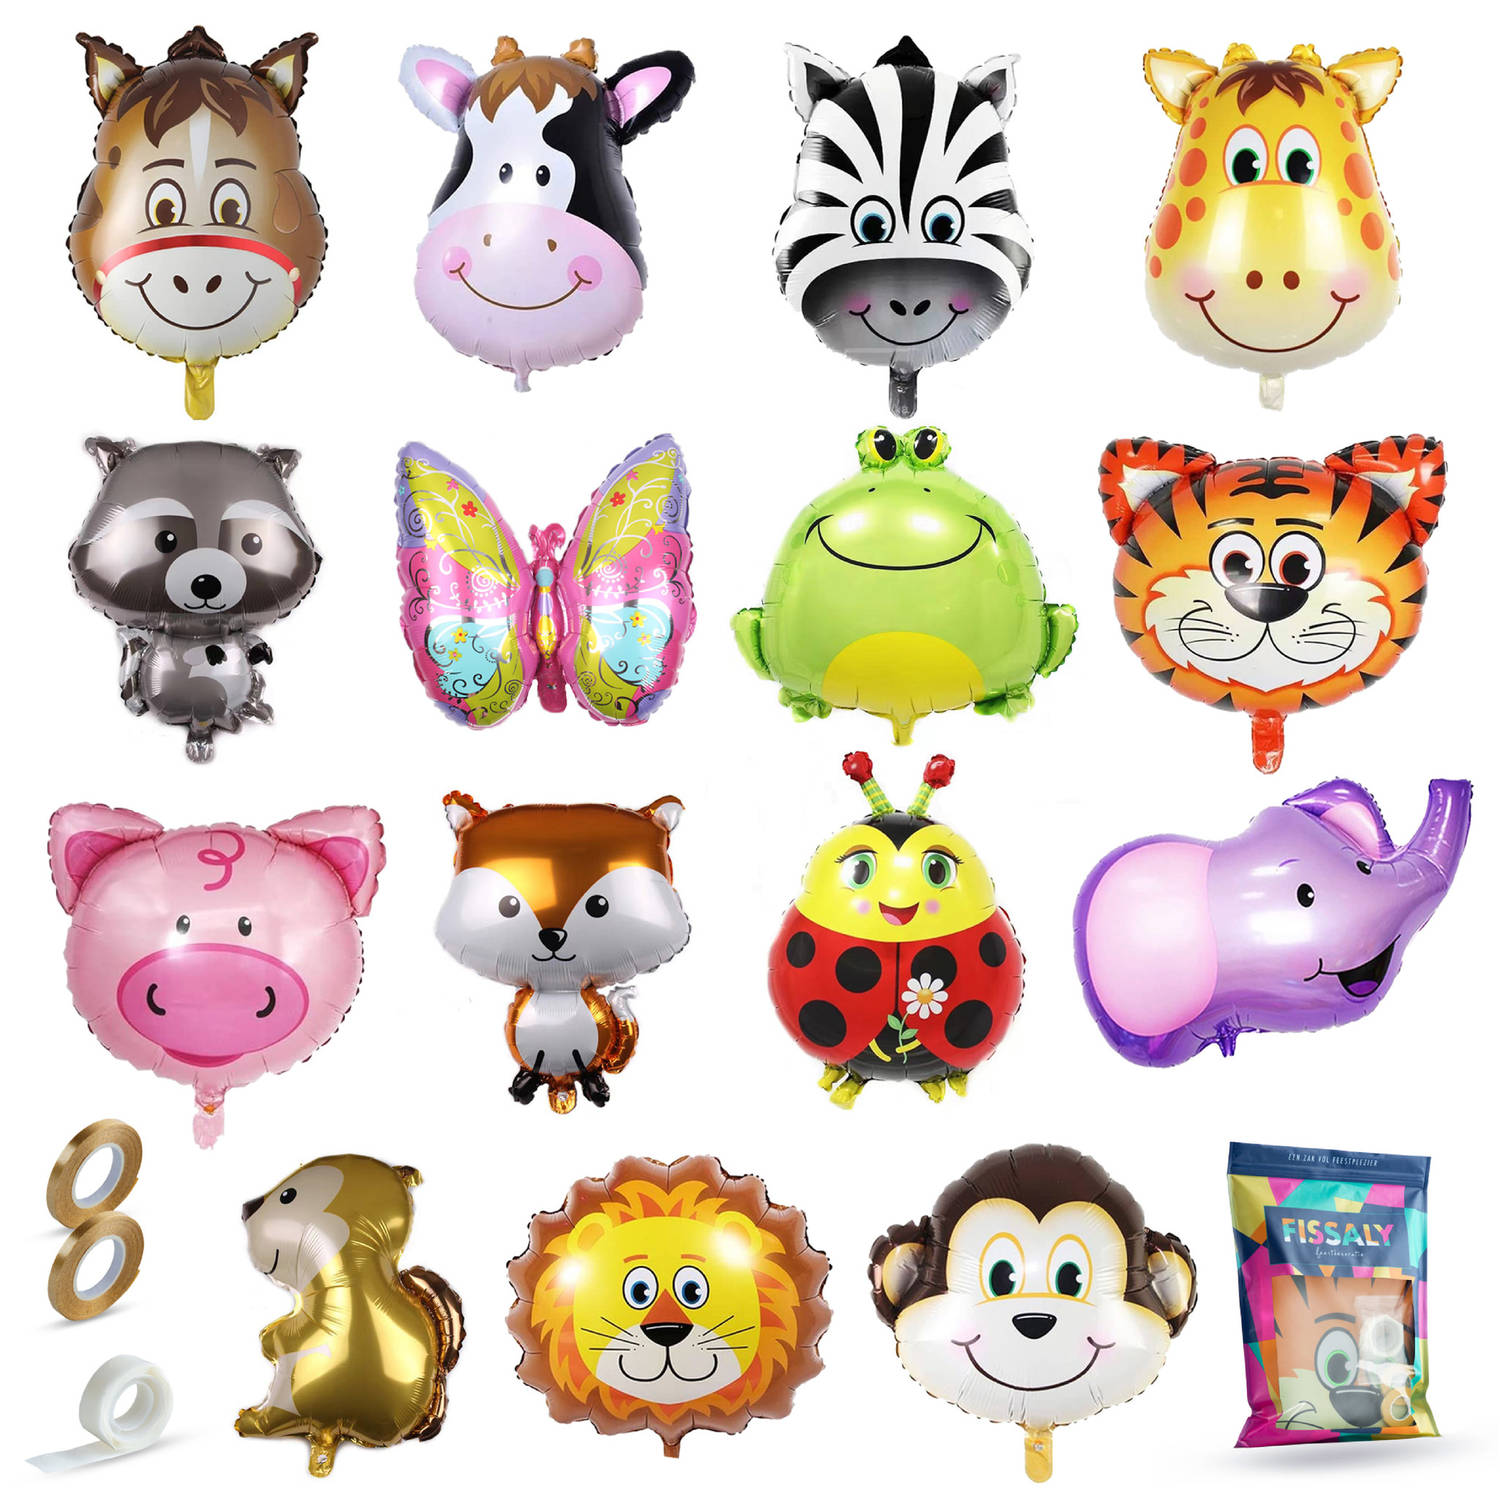 Fissaly® 15 Grote Dieren Folie Ballonnen met Lint - Feest Versiering - Kinderfeestje - Decoratie